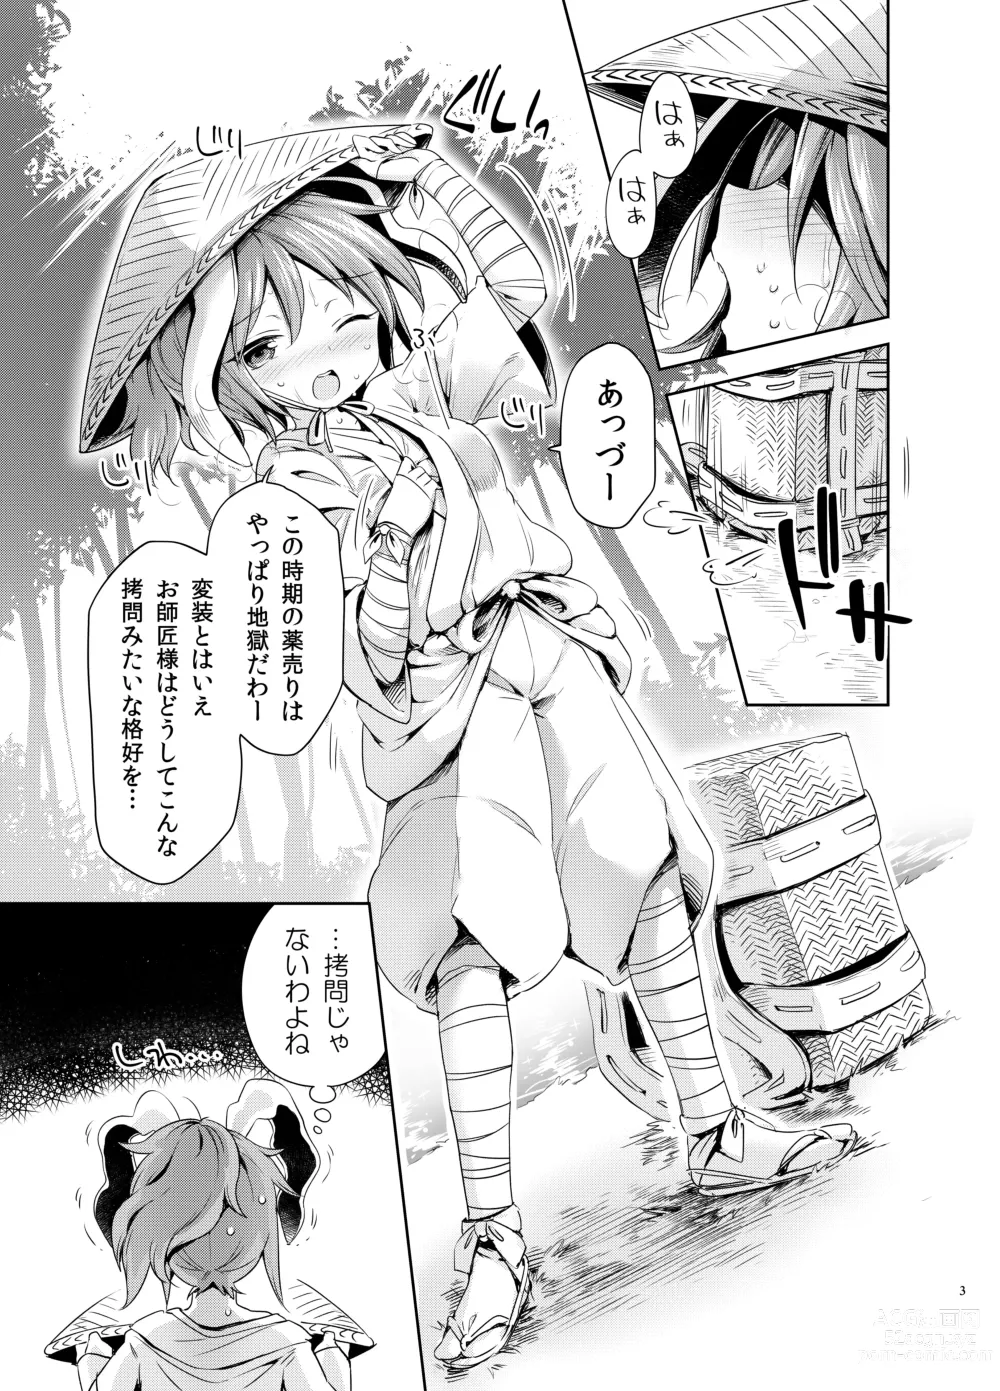 Page 2 of doujinshi Kougou Estro Tuning